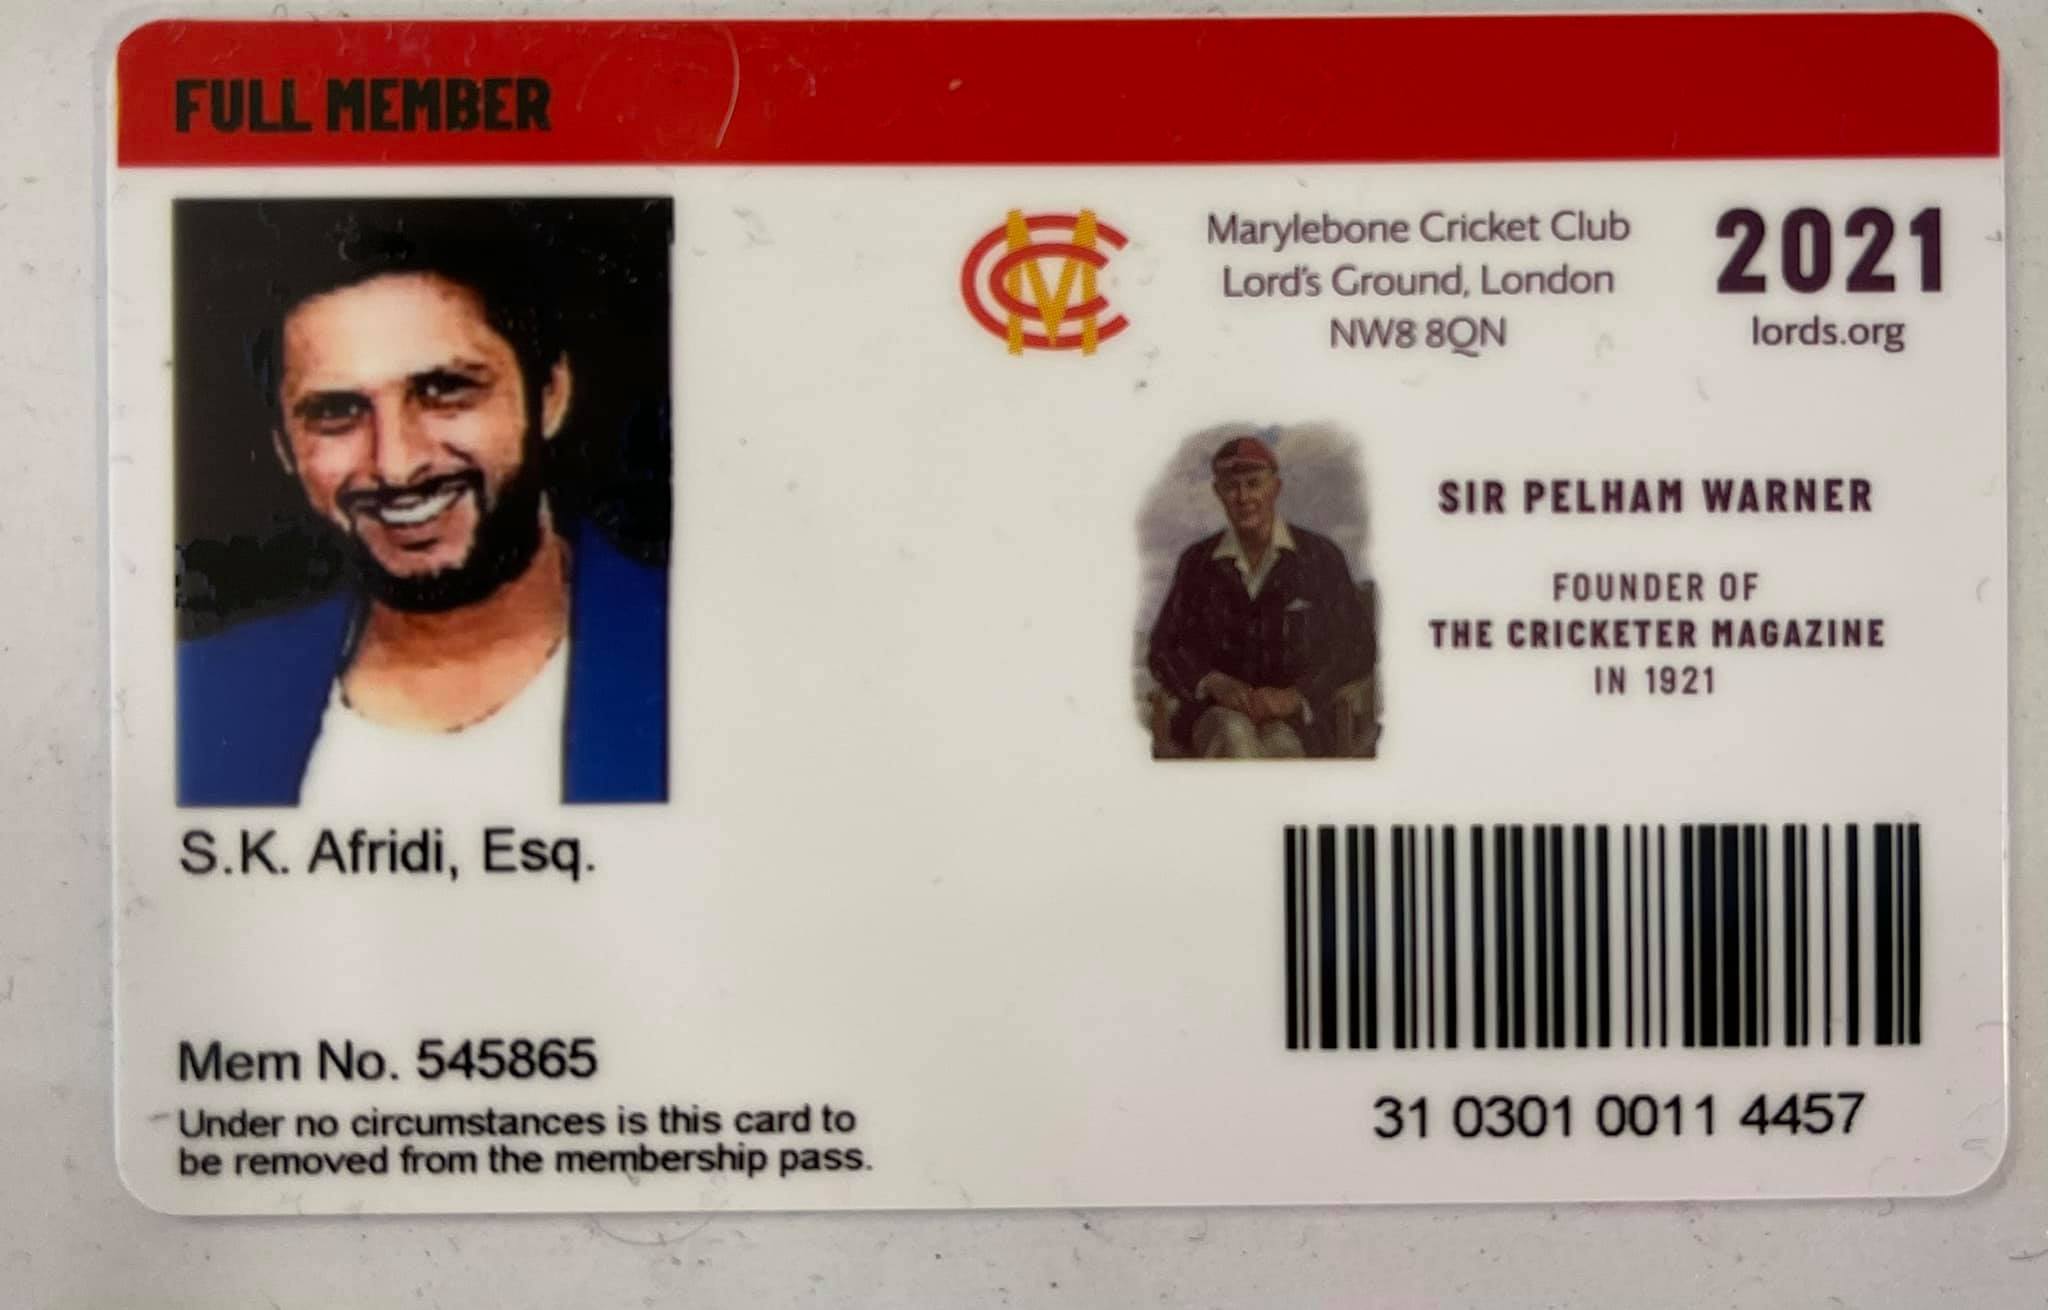 Shahid Afridi received lifetime Membership from MCC (Marylebone Cricket Club)